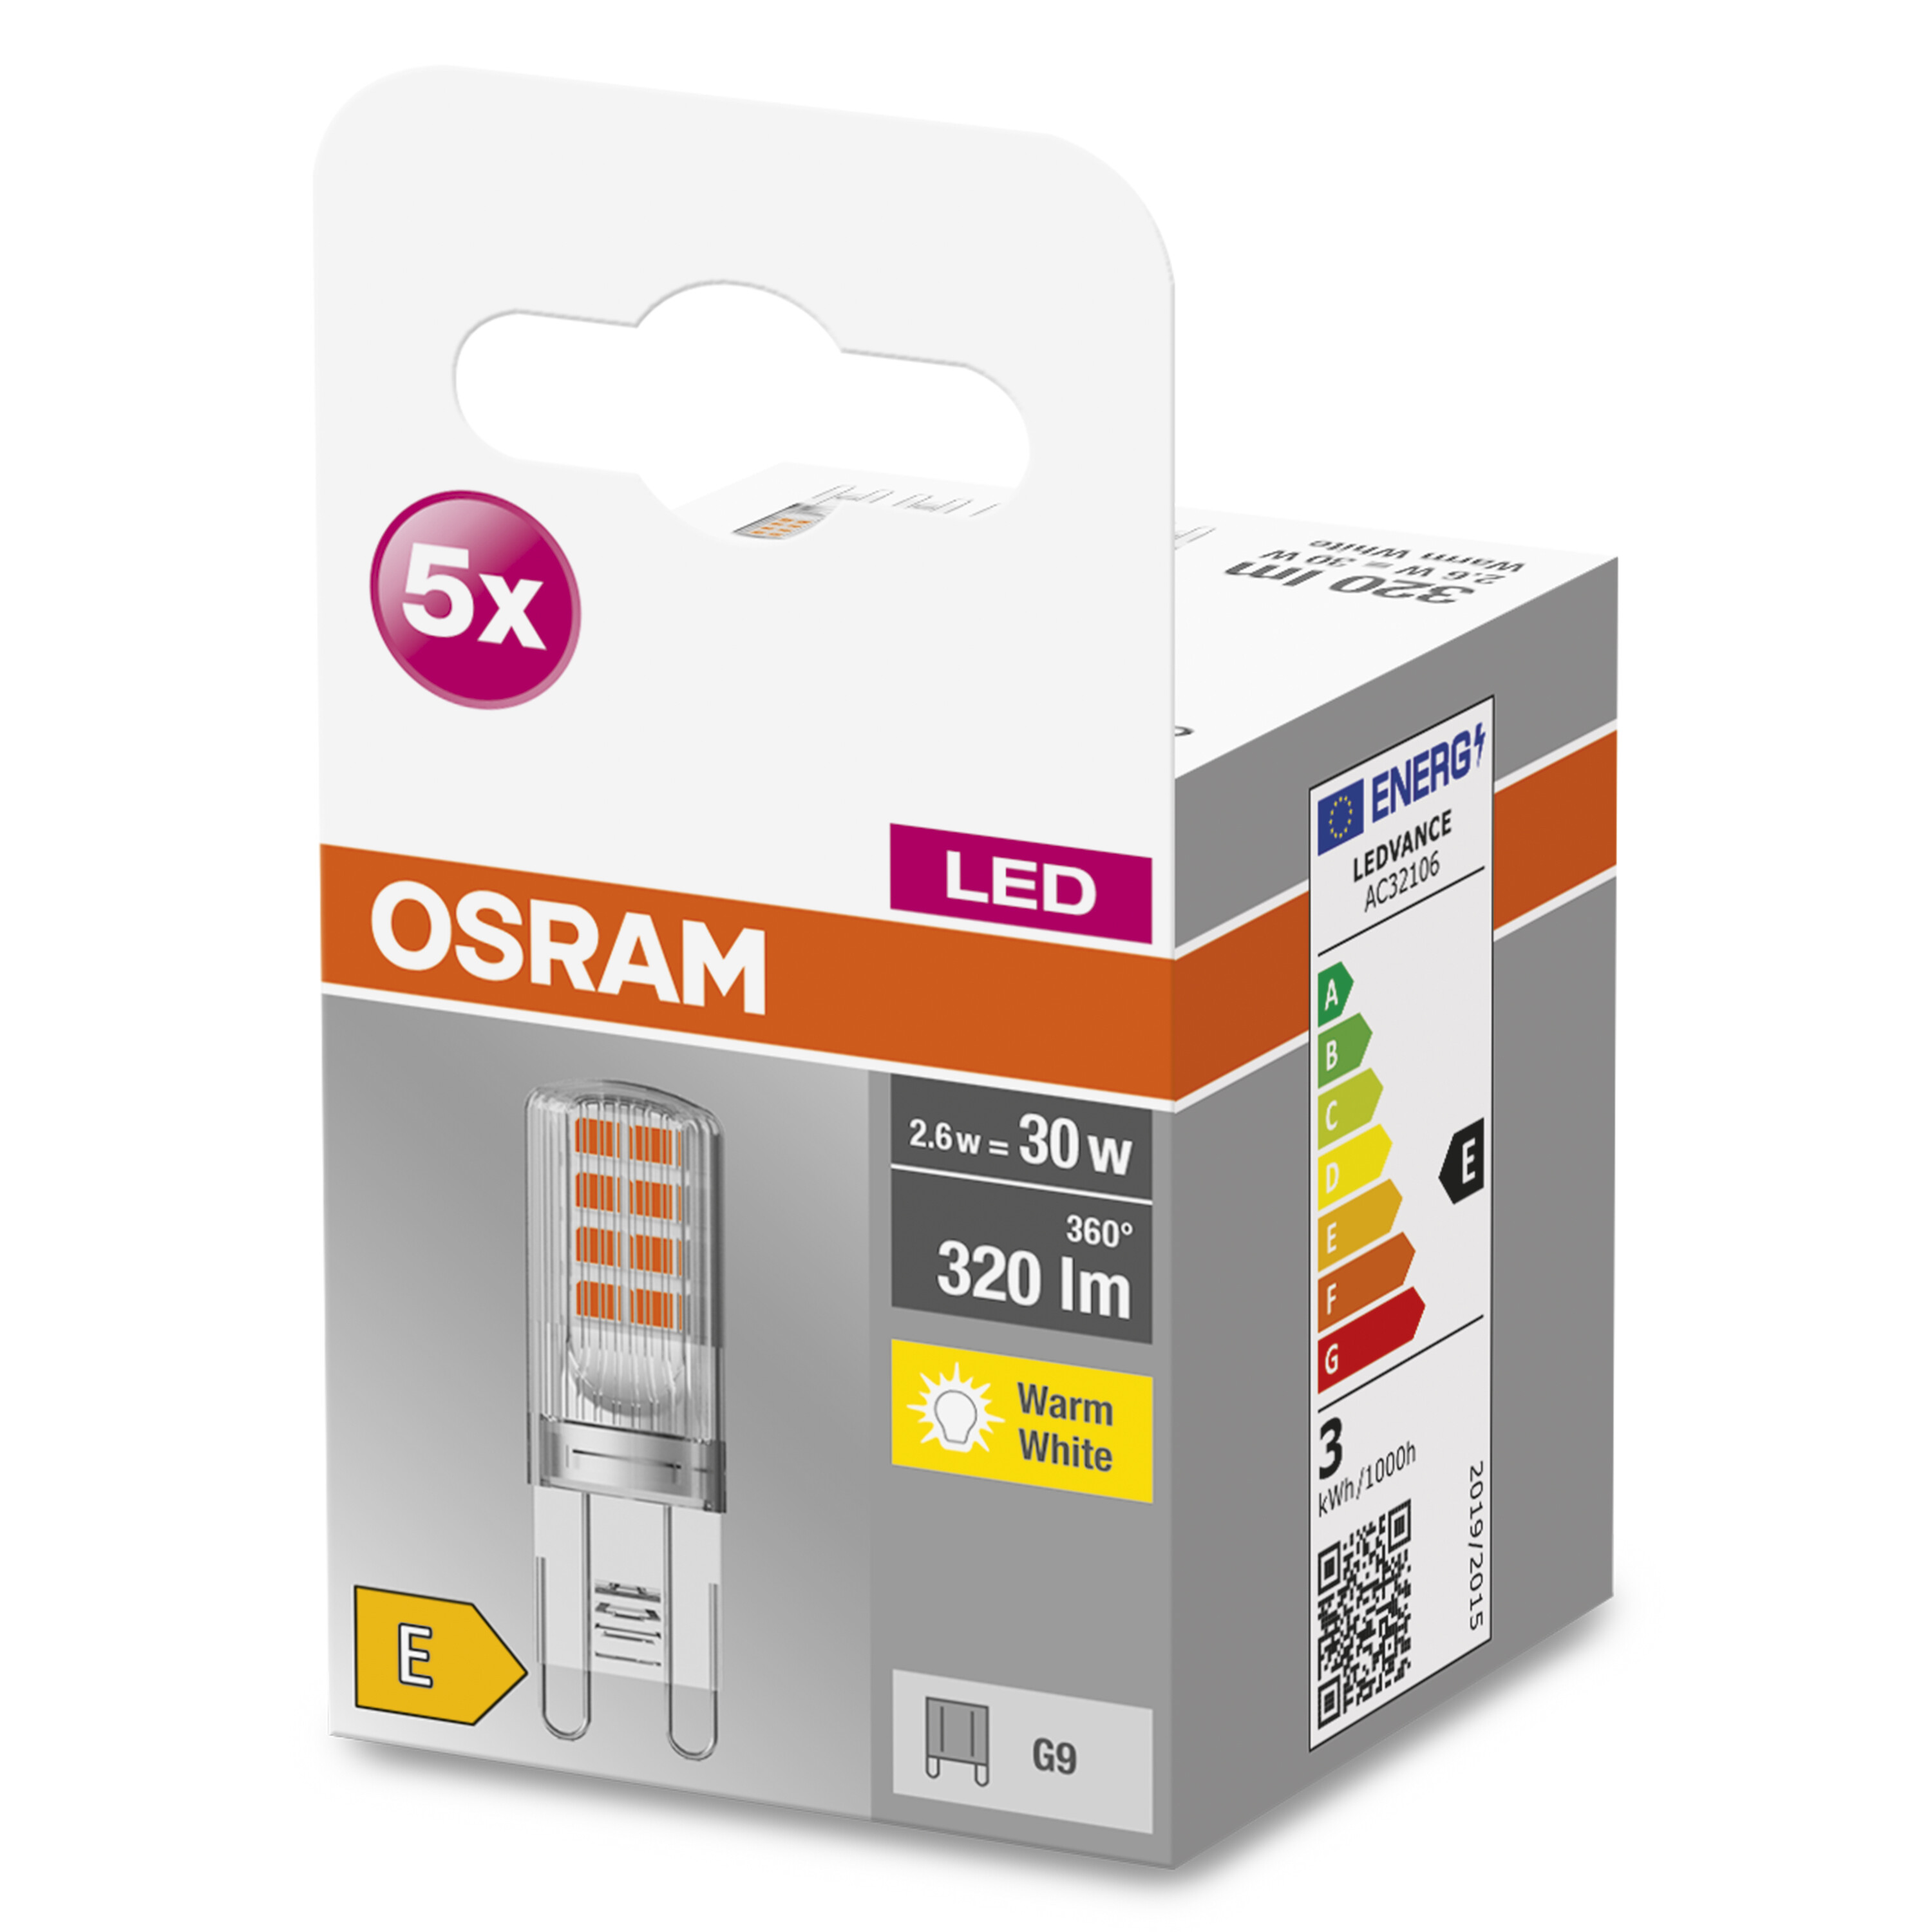 OSRAM  LED BASE Warmweiß 320 Lumen G9 LED PIN Lampe